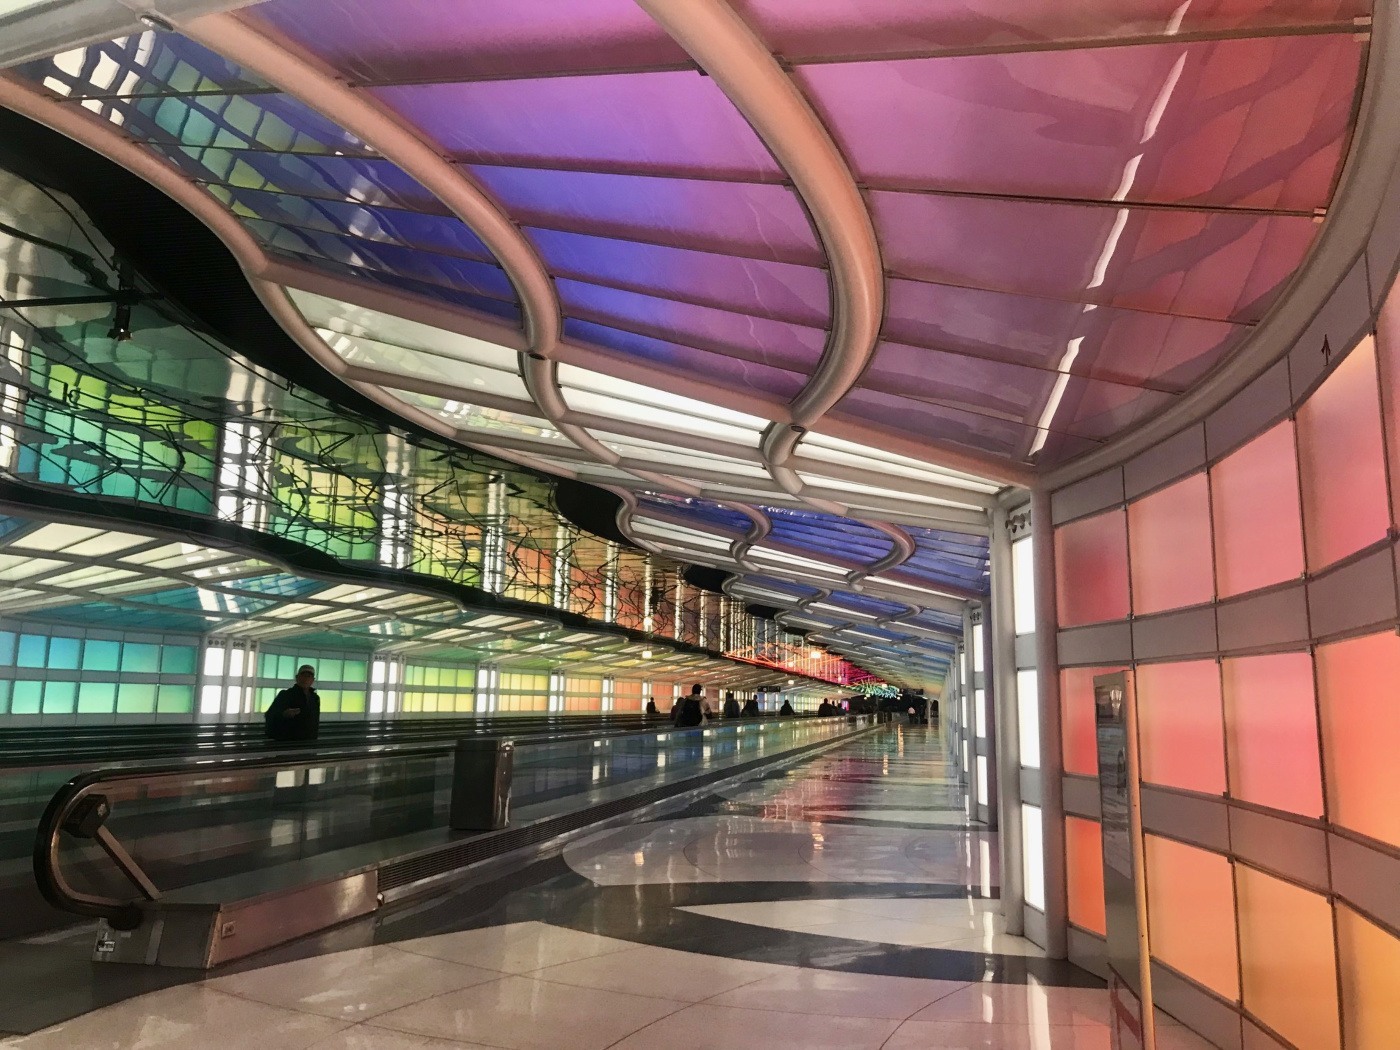 Obra em neon no aeroporto internacional de Chicago foi feita por do artista Michael Hayden e se chama The Sky is the Limit